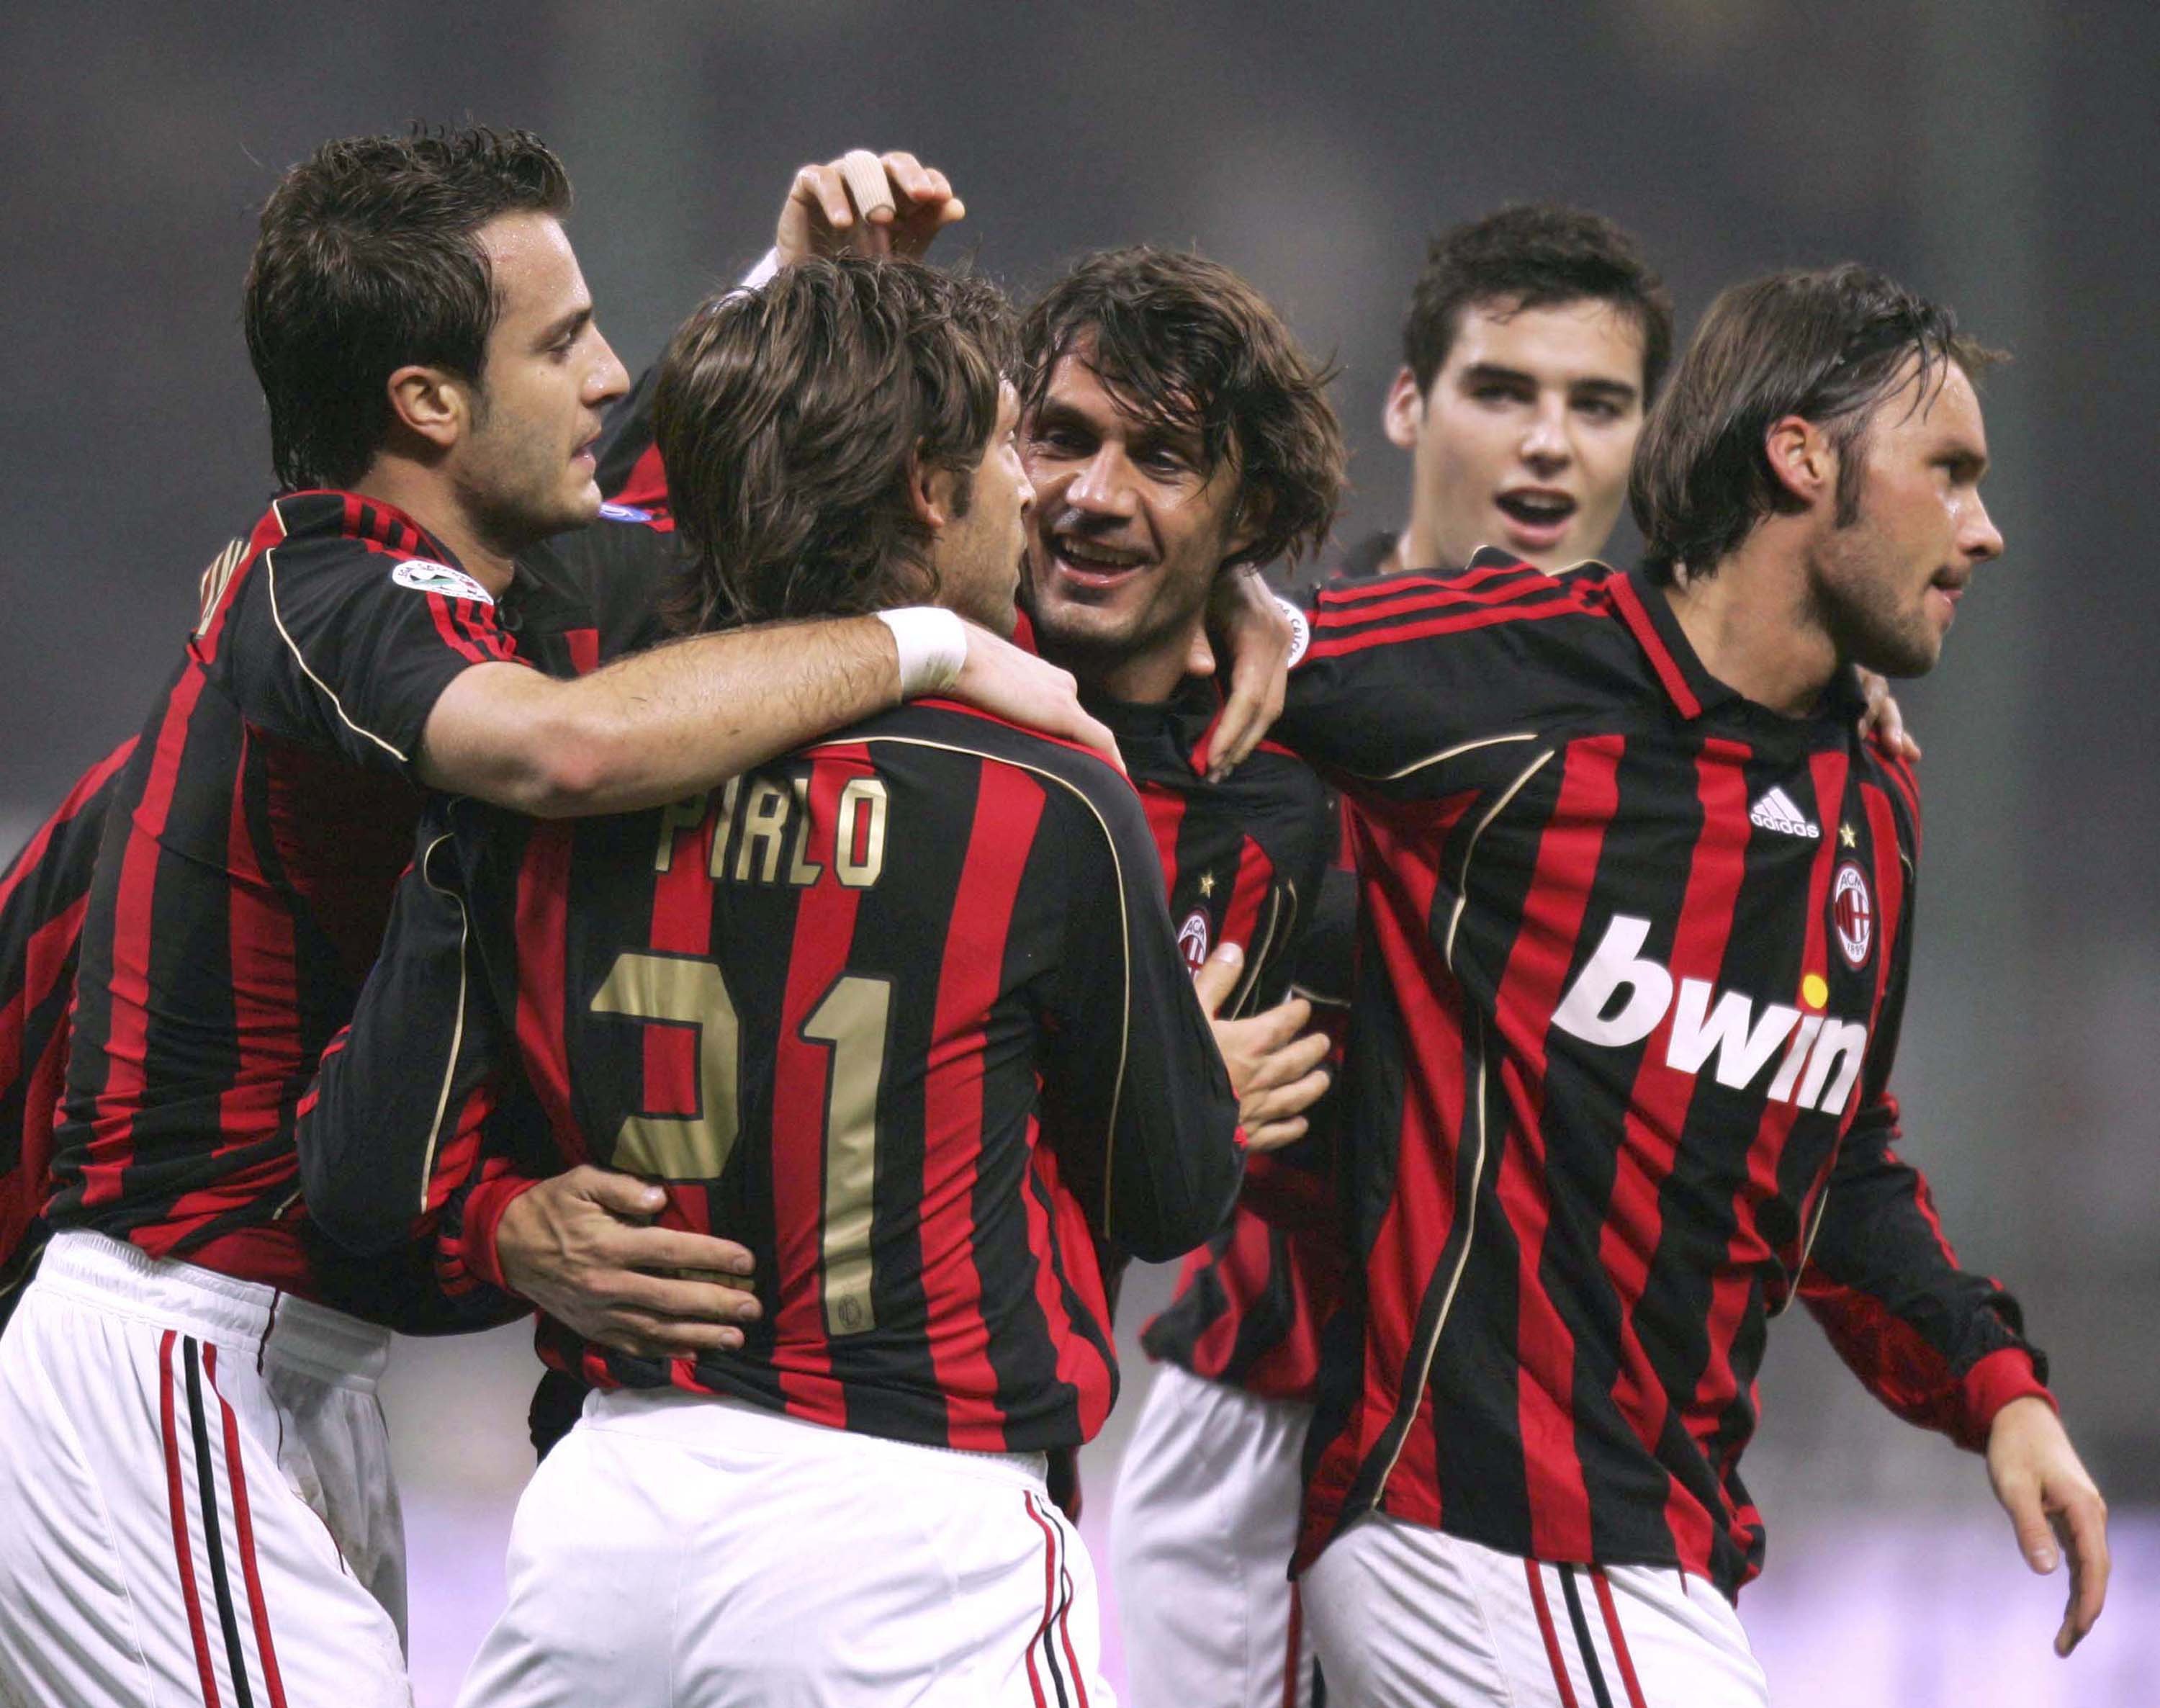 Lagring klasselærer mistet hjerte Why AC Milan must channel the spirit of 2006 and believe again